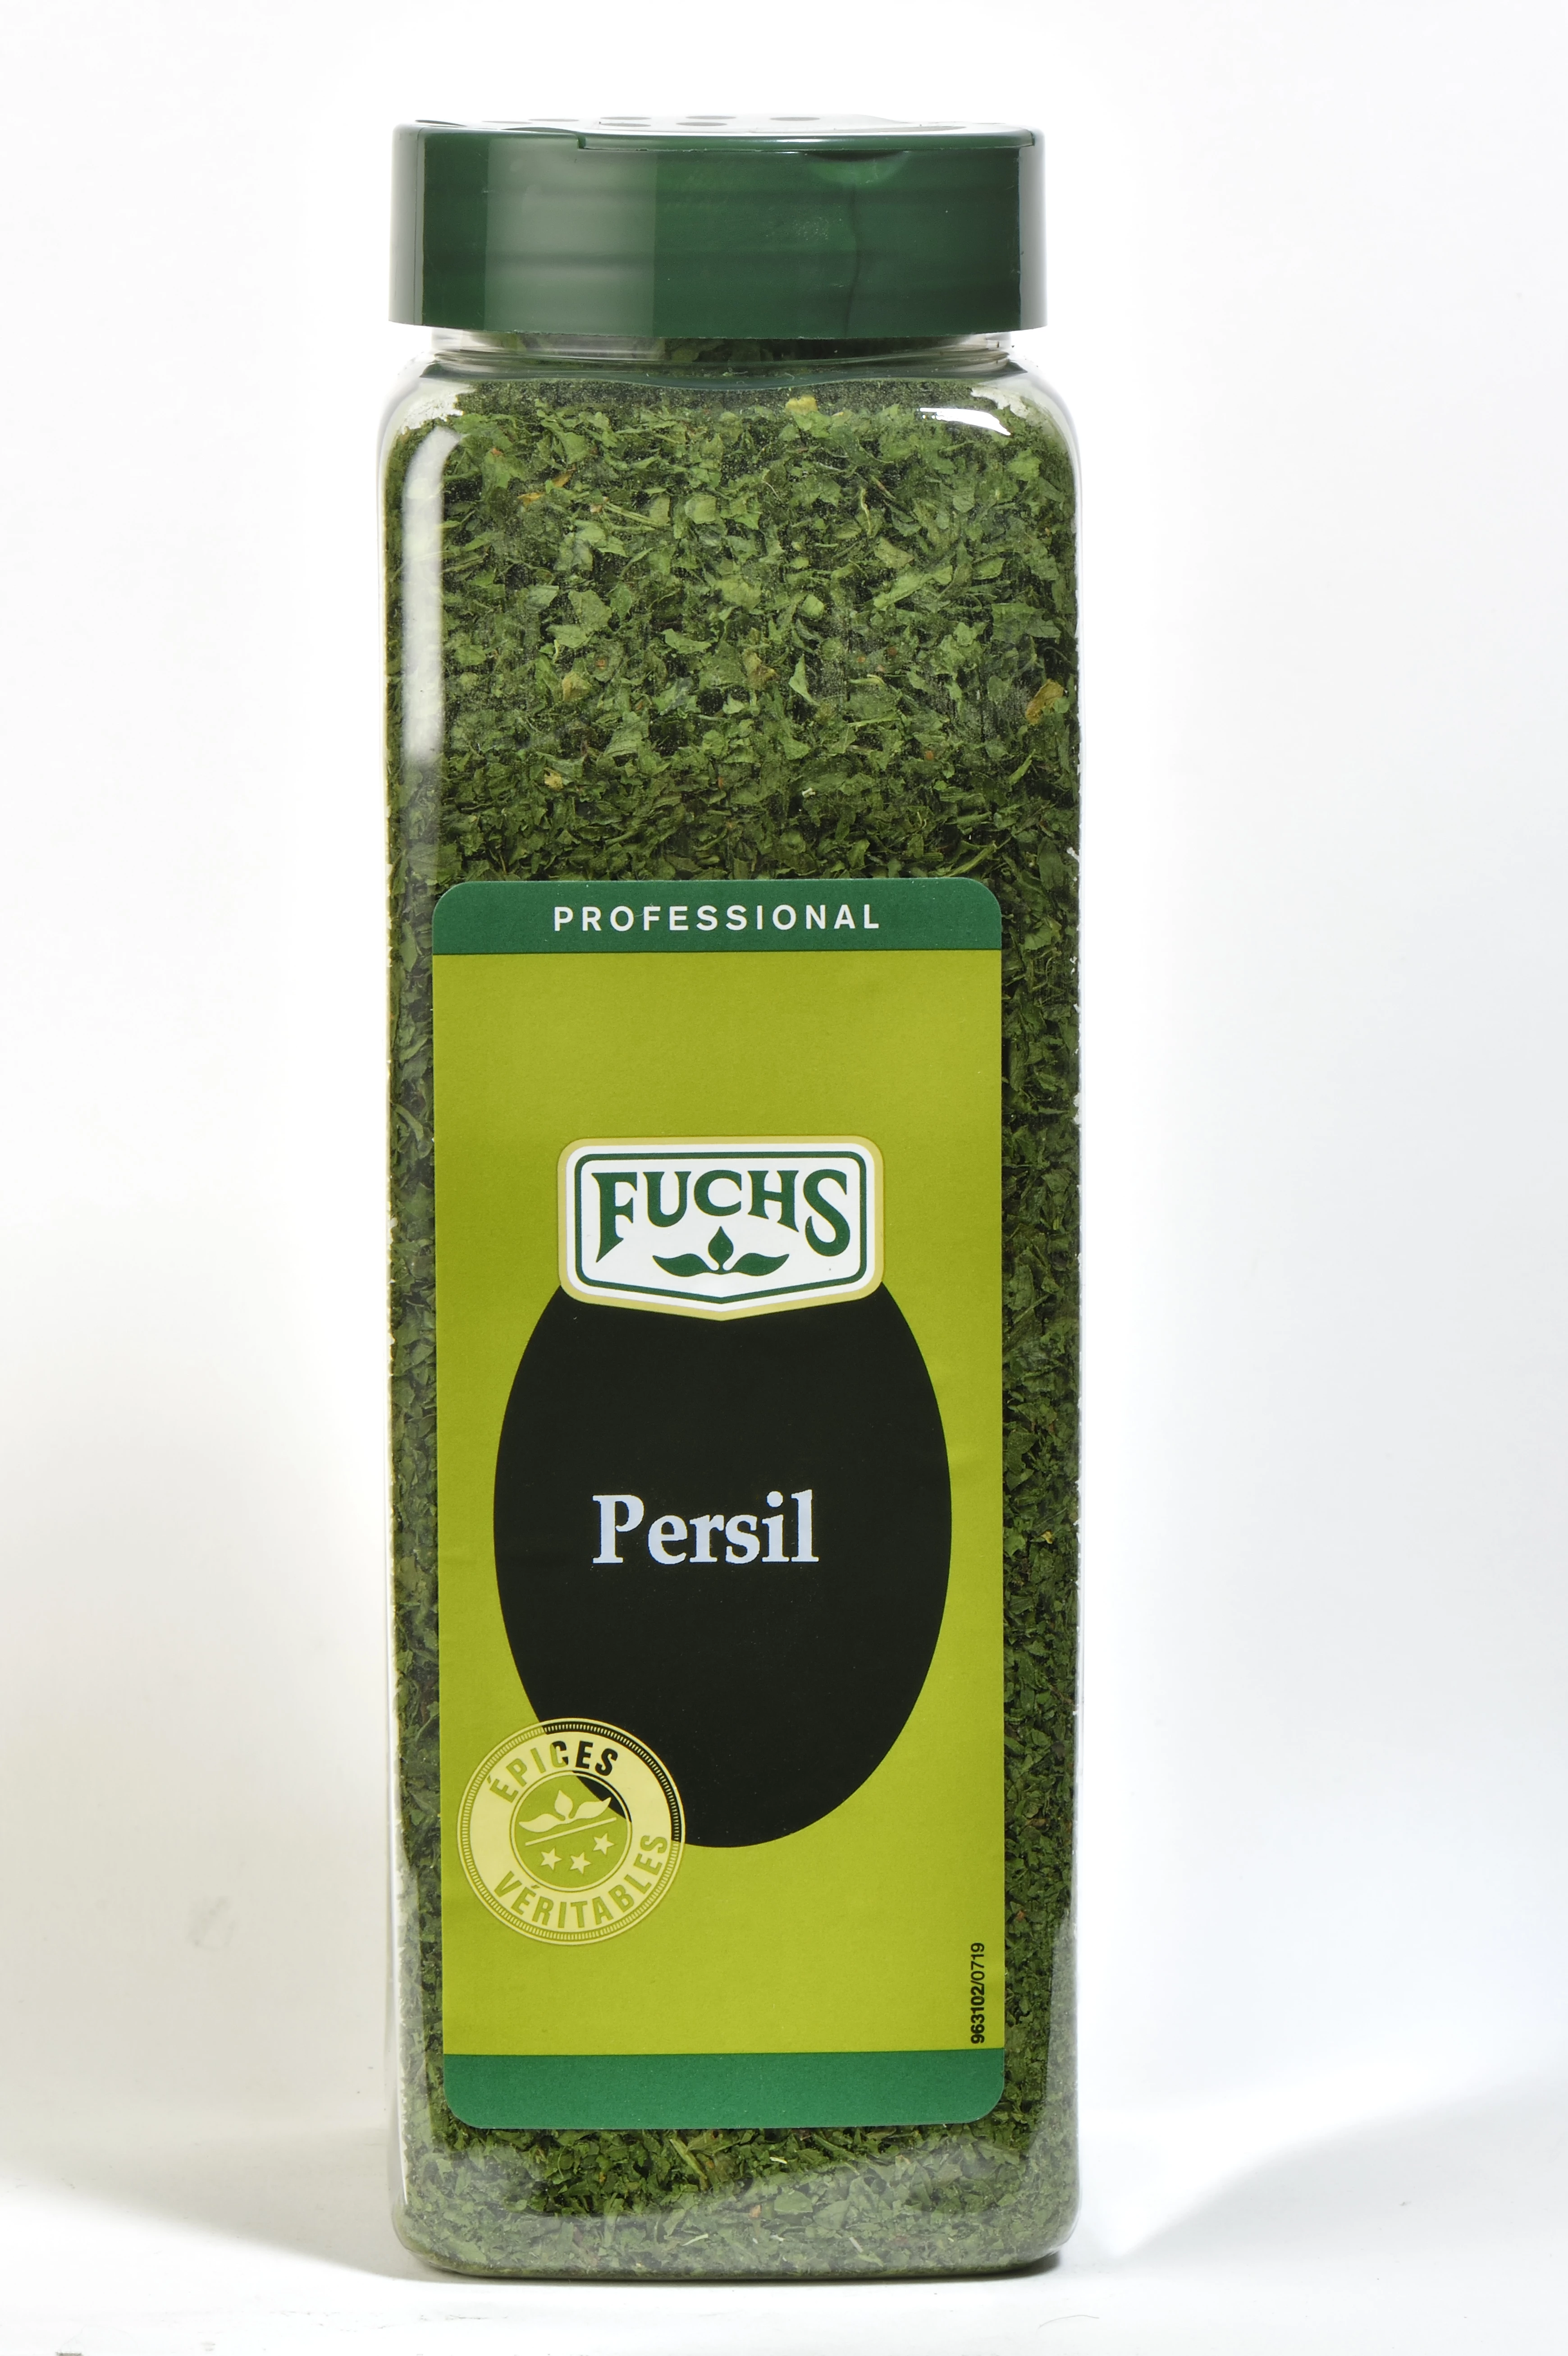 Persil, 100 g - FUCHS